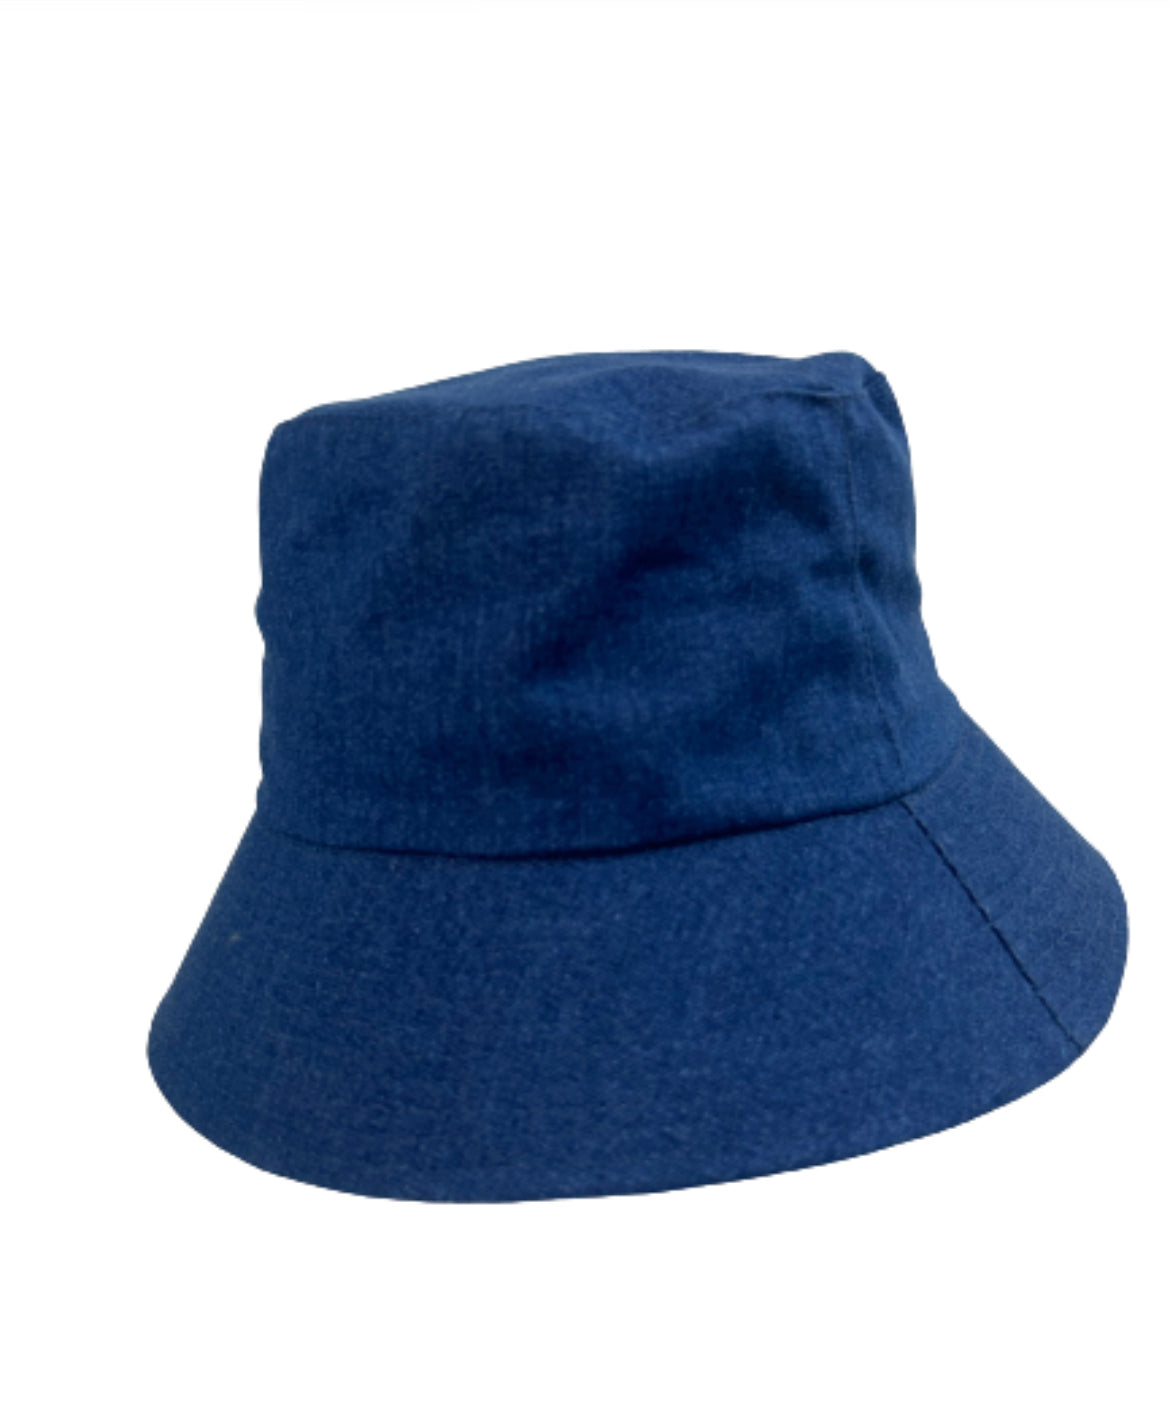 Bucket Hat Drill Jean Gorro Giligan Unisex adultos - Azul